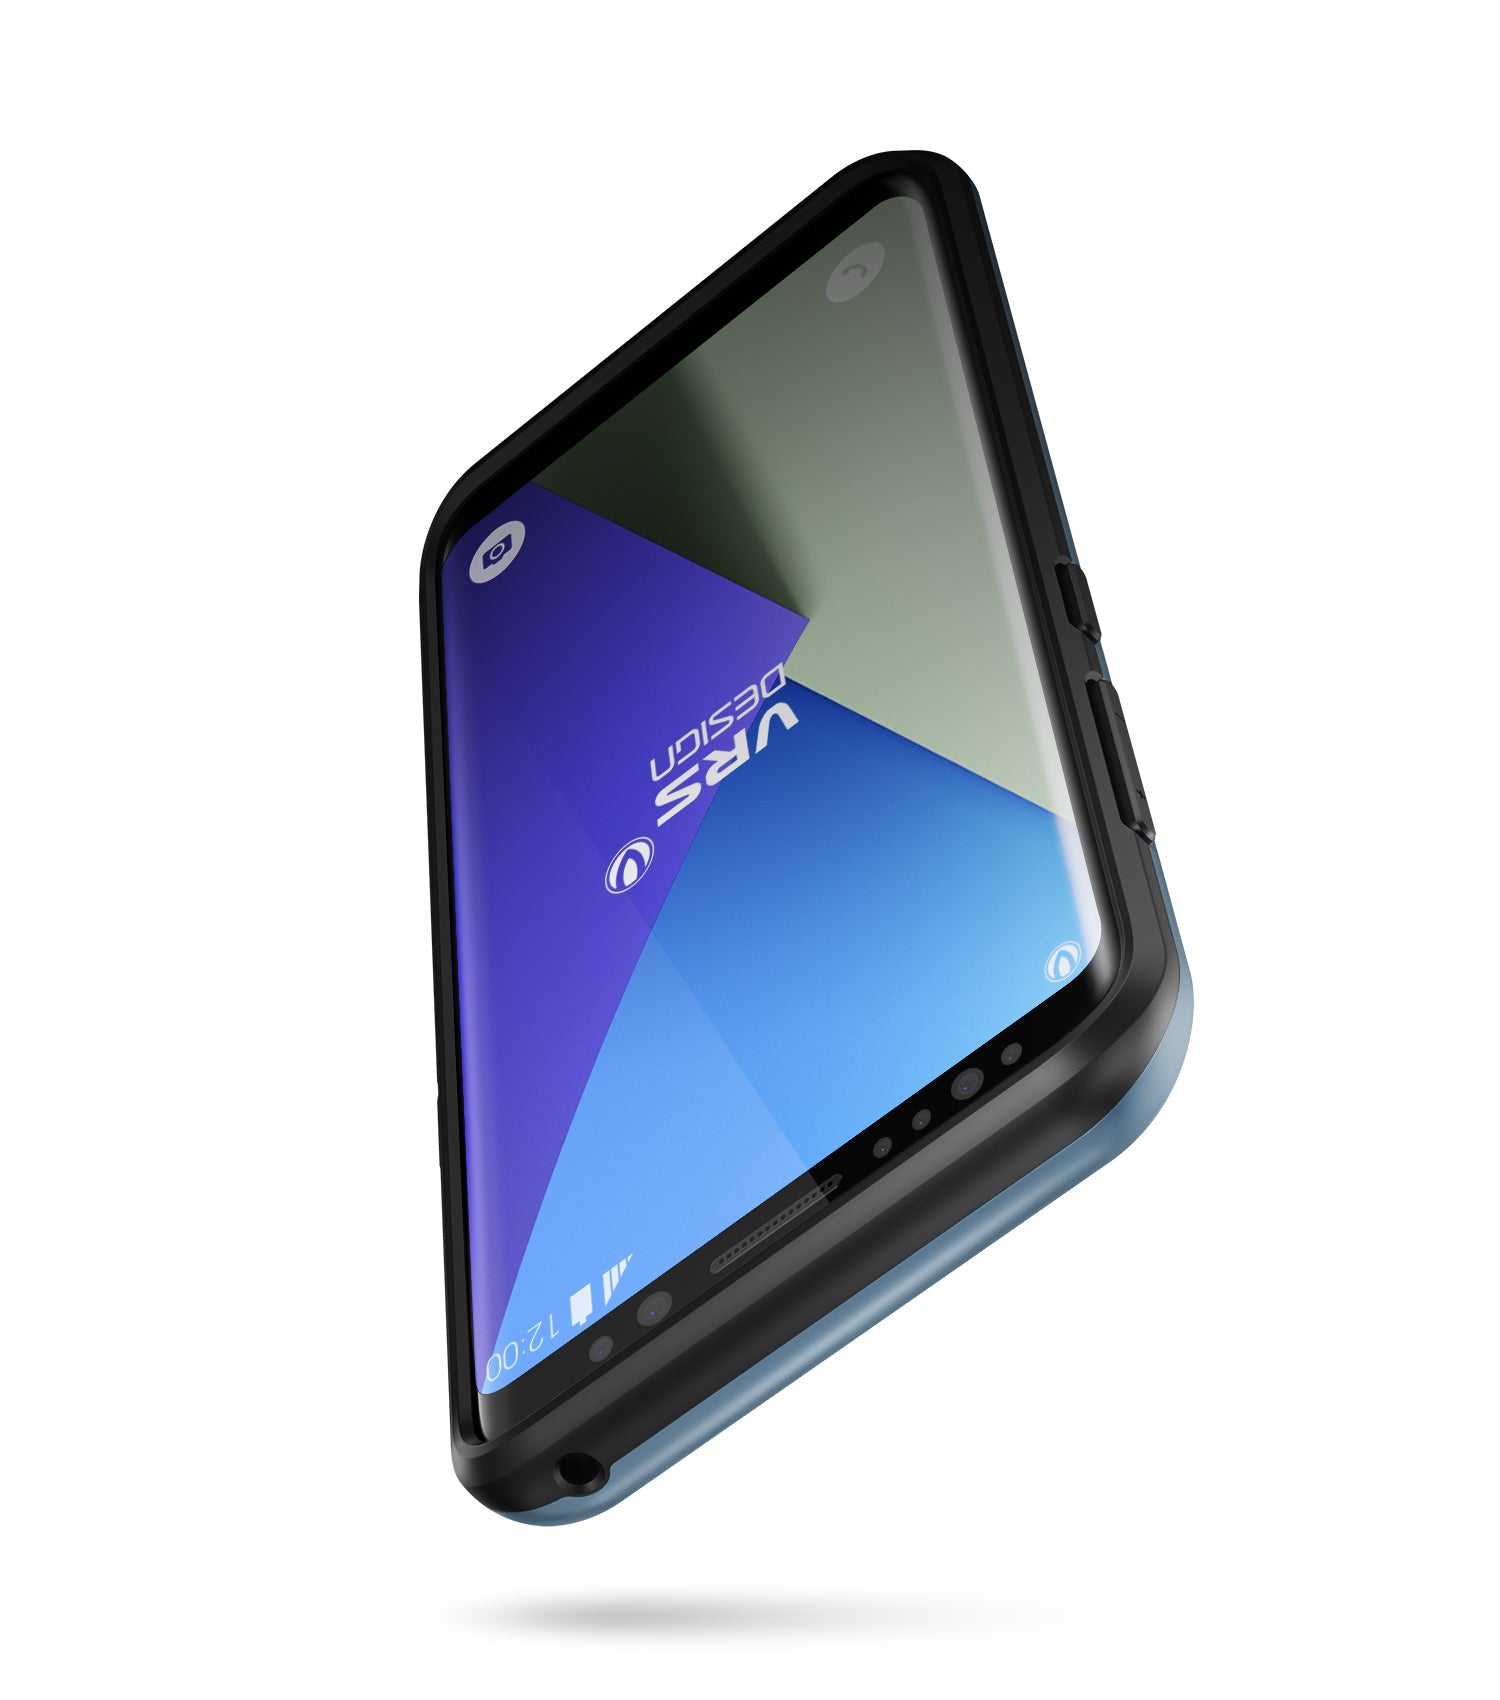 High Pro Shield For Galaxy S8 Plus Anti Shocks Case Original From VRS Black / Blue